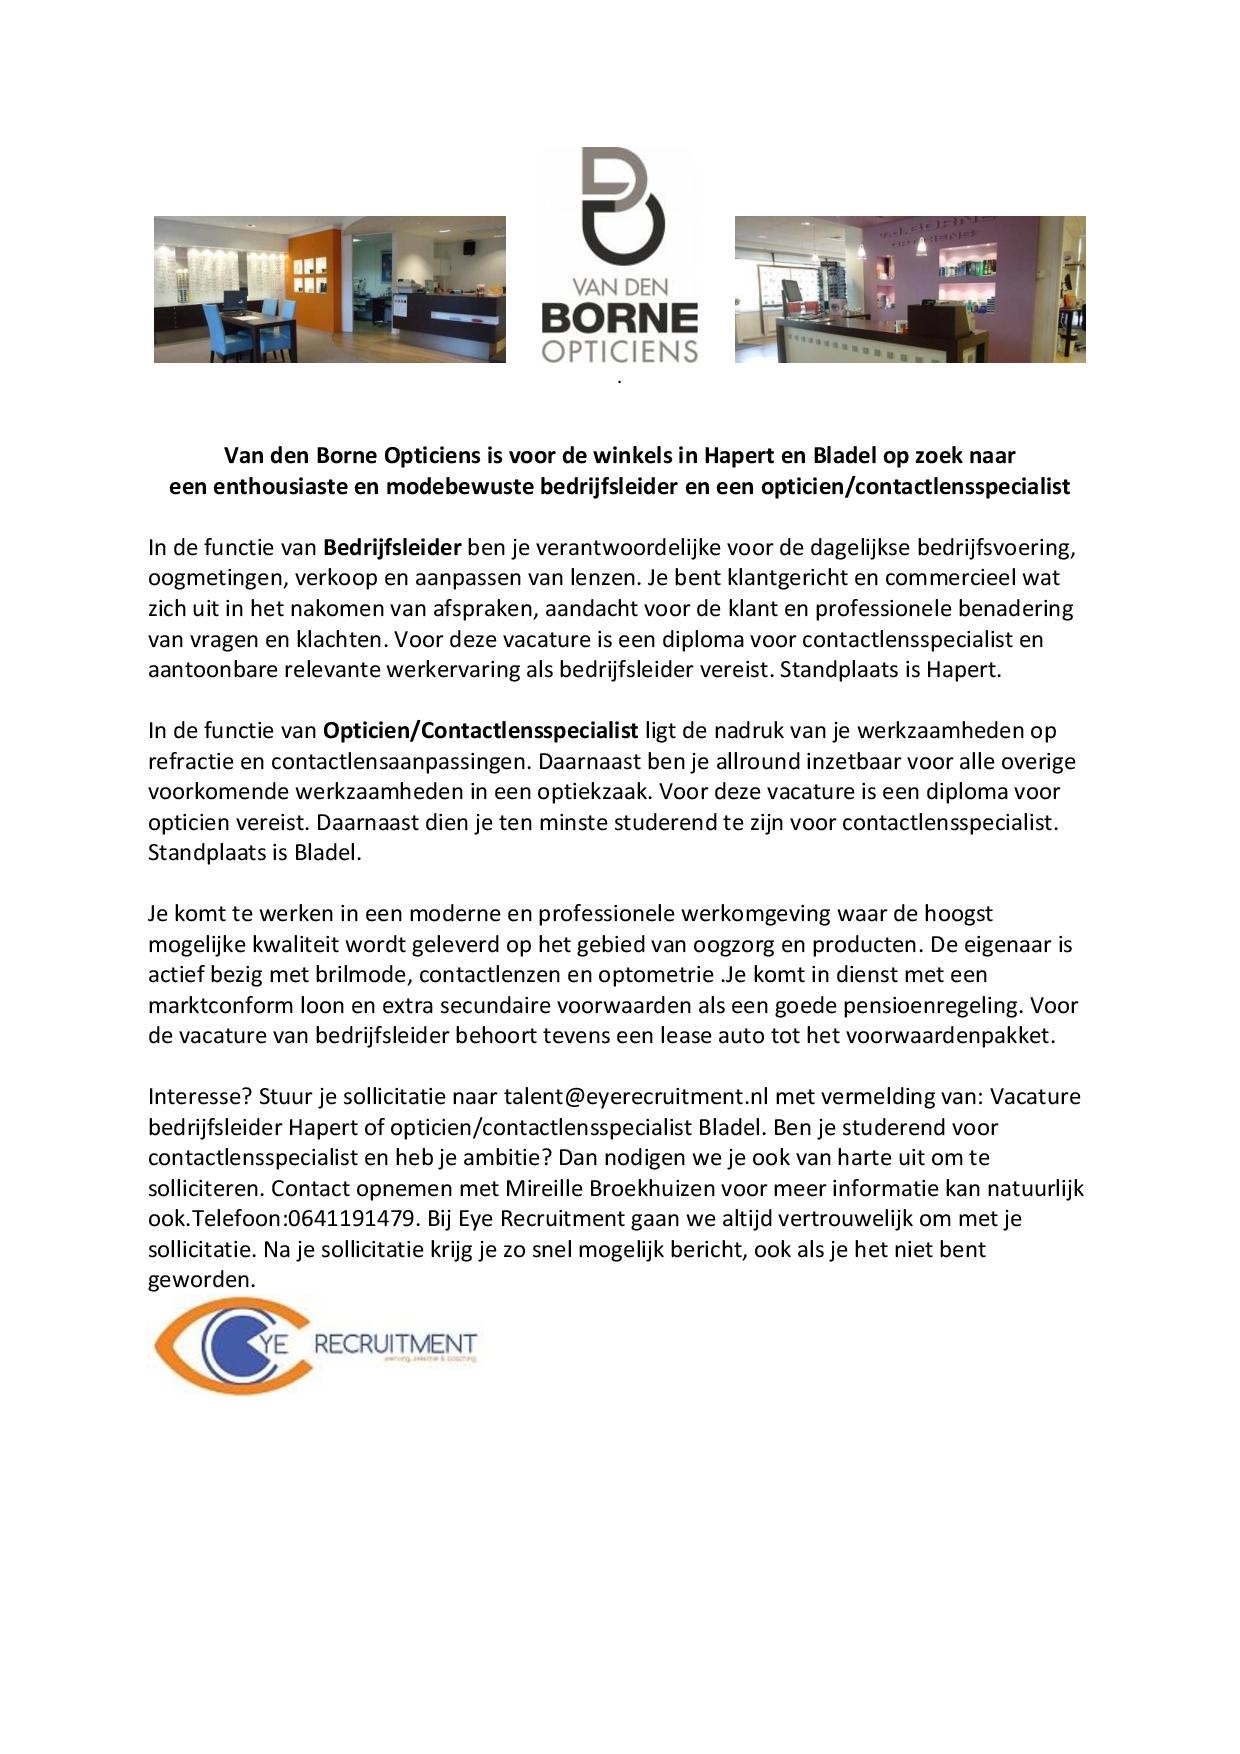 Van den Borne Opticiens adv dec 2015-page-001